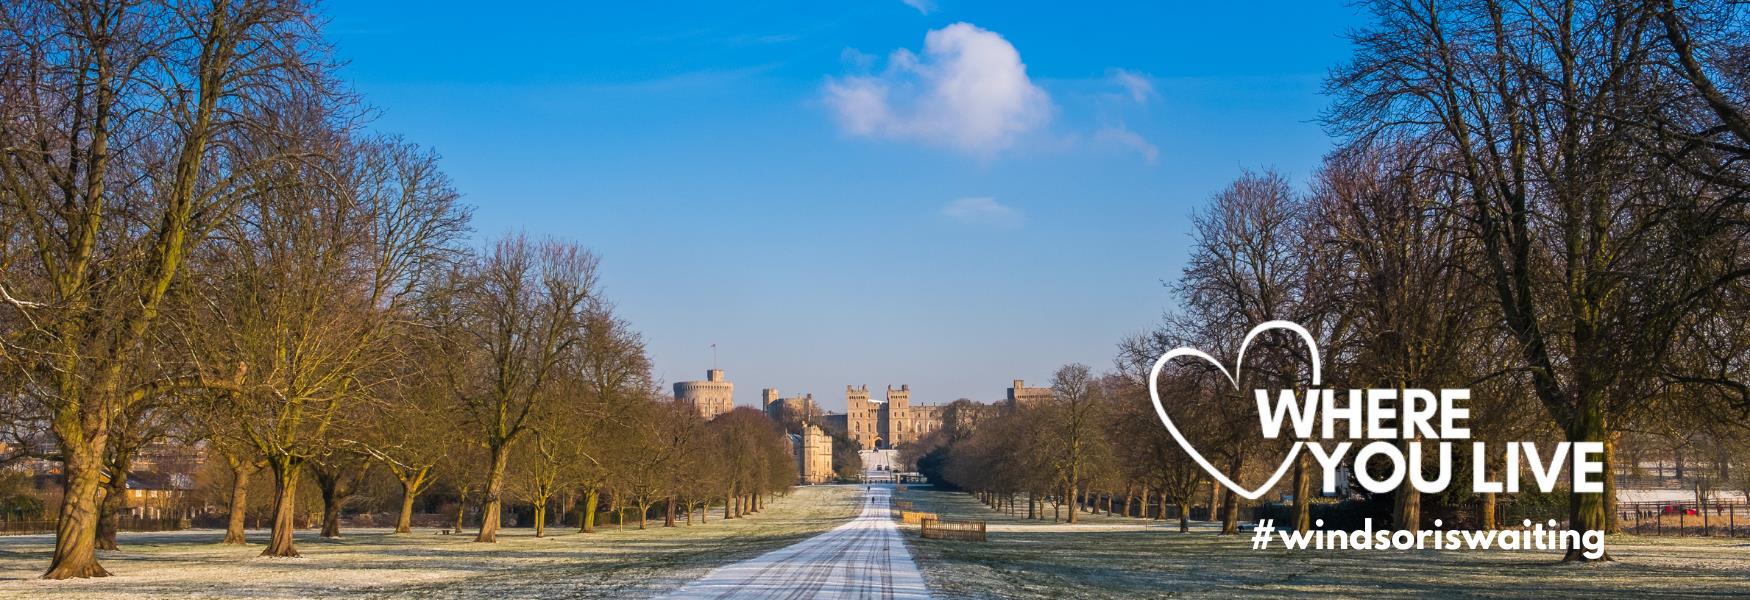 Long Walk and Windsor Castle in winter